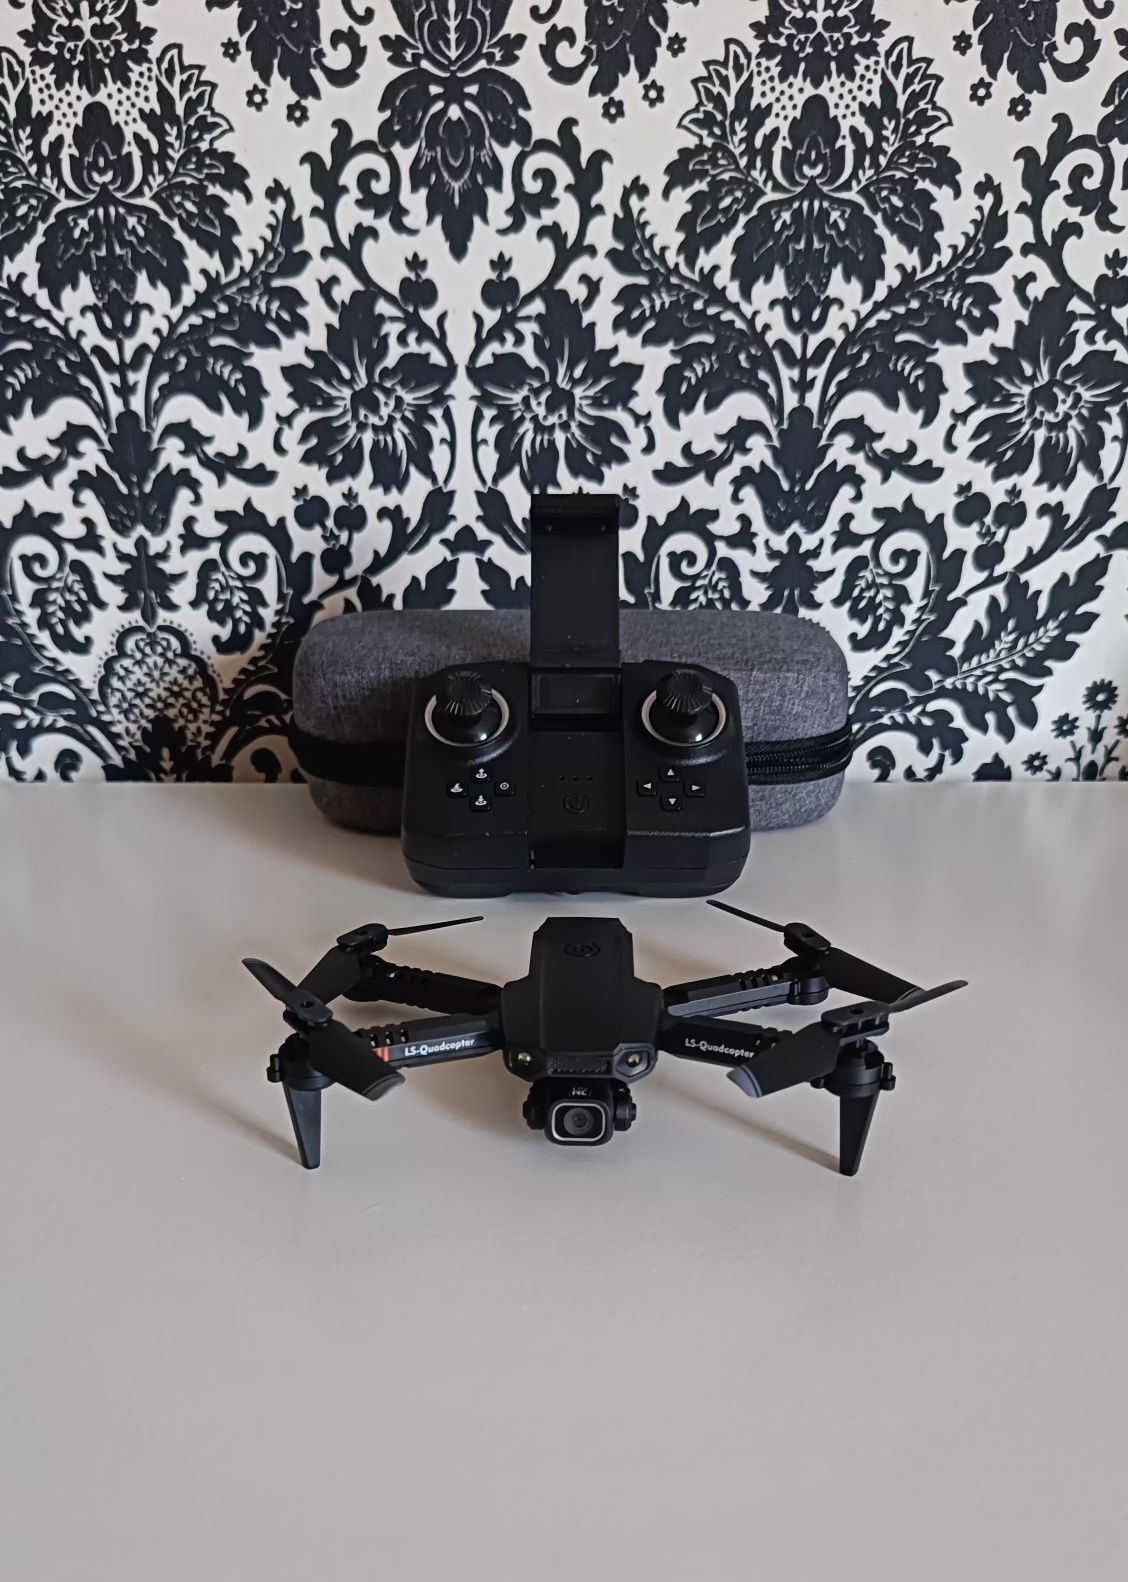 Dron Lasenix XT6 Dual Camera OKAZJA !!!